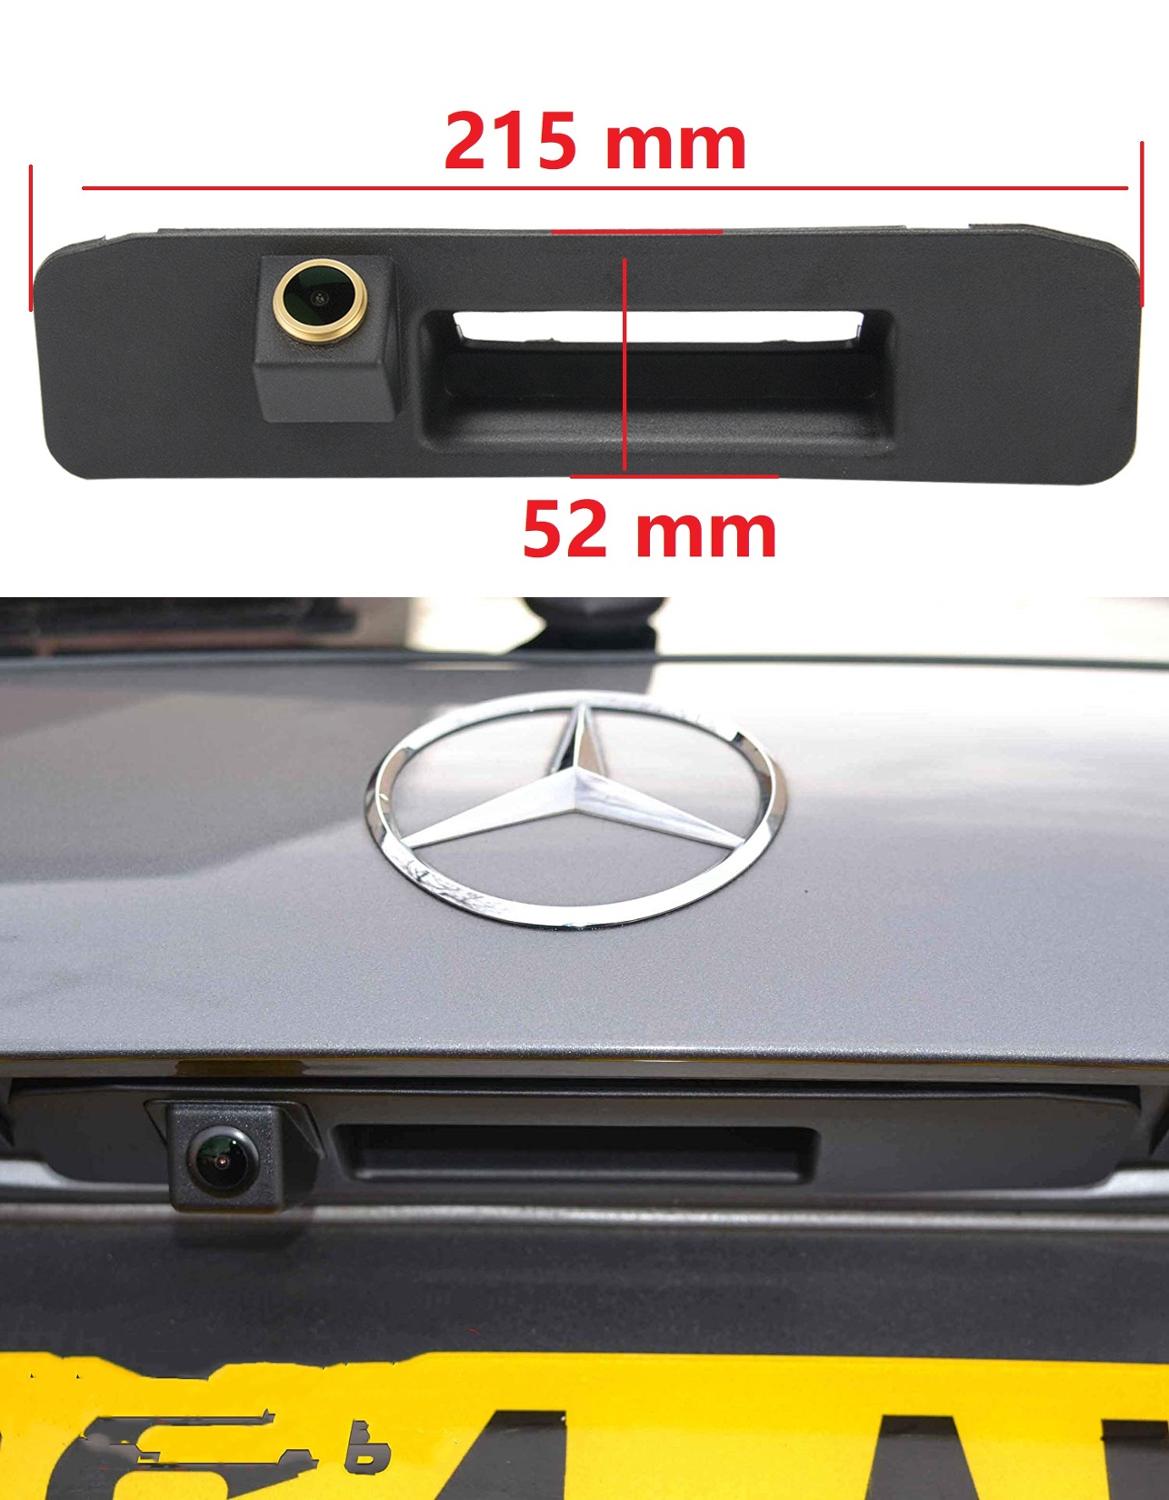 Misayaee HD Car Rear View Reverse Backup Camera for Mercedes GLA X156 W176 C117 X166 W166 W167 X156 X253 GL GLS X166 vito W447